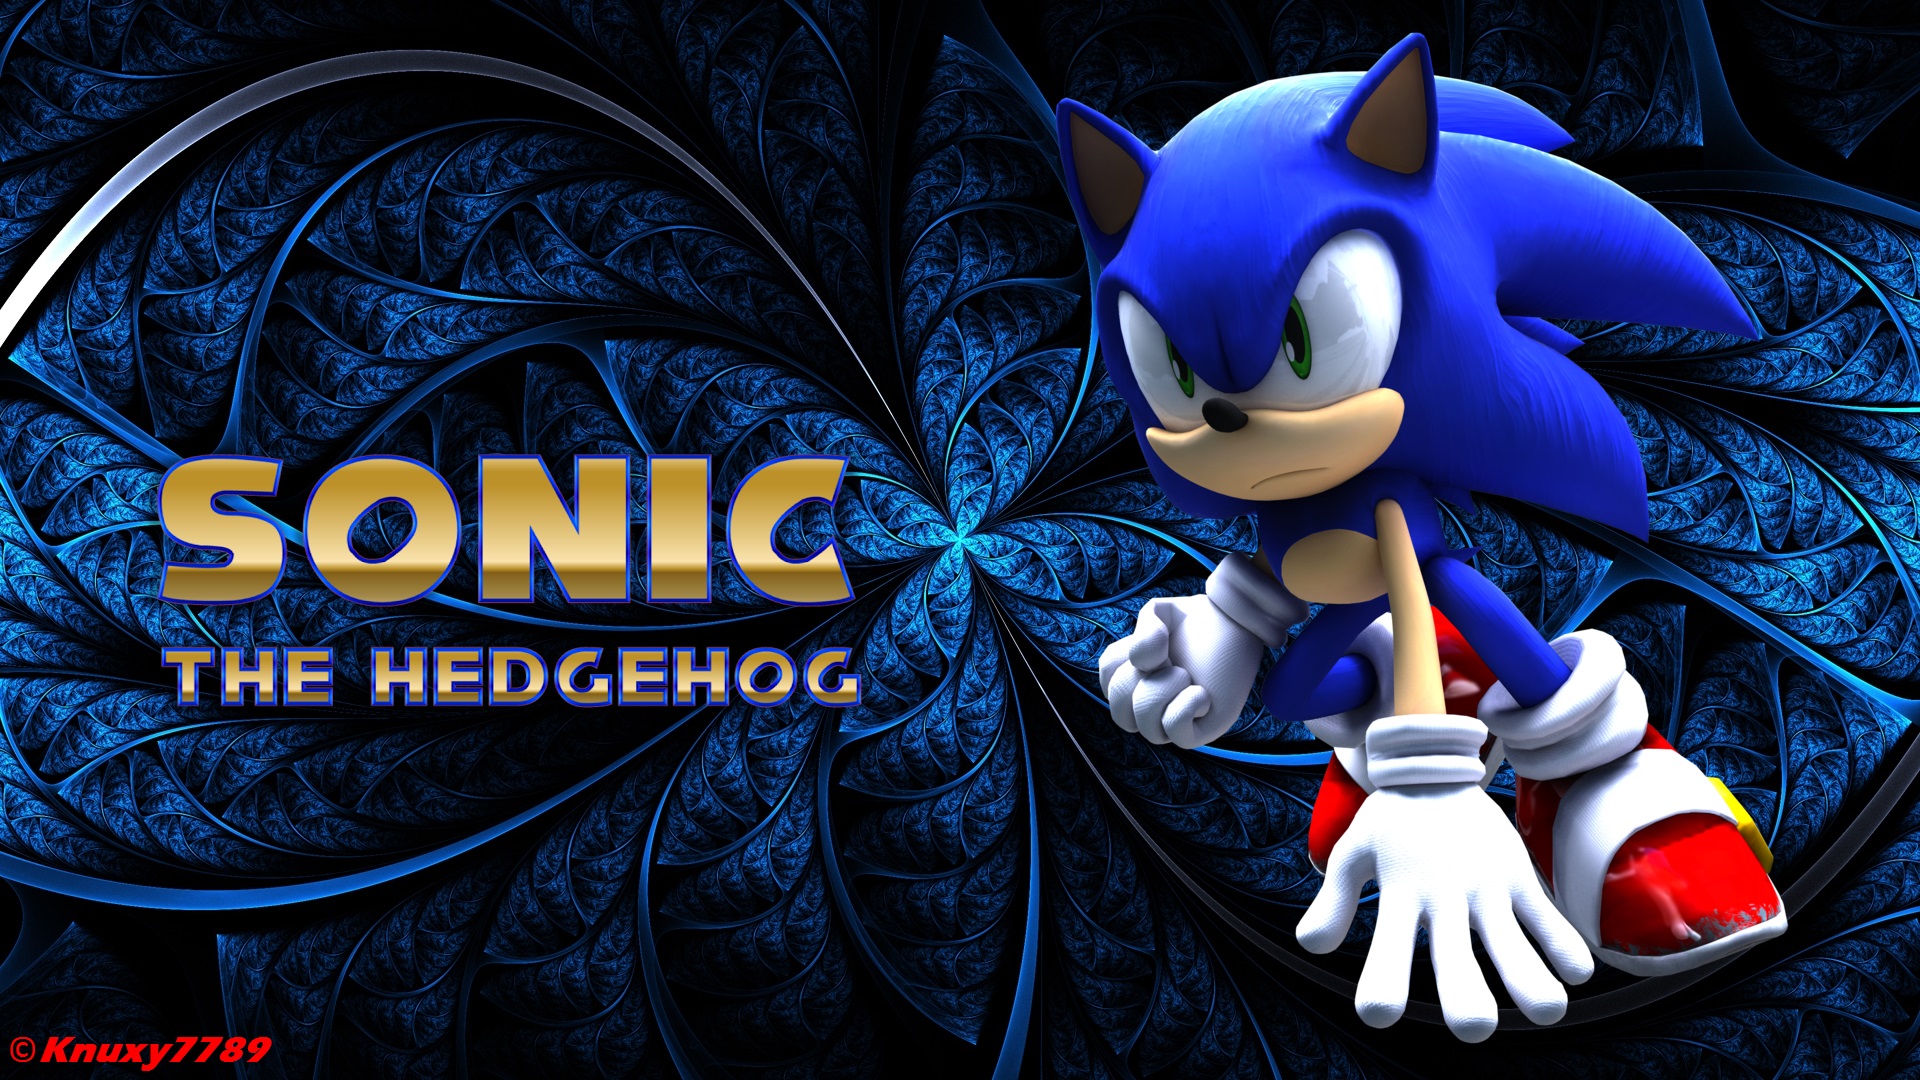 Sonic The Hedgehog HD Wallpapers | PixelsTalk.Net